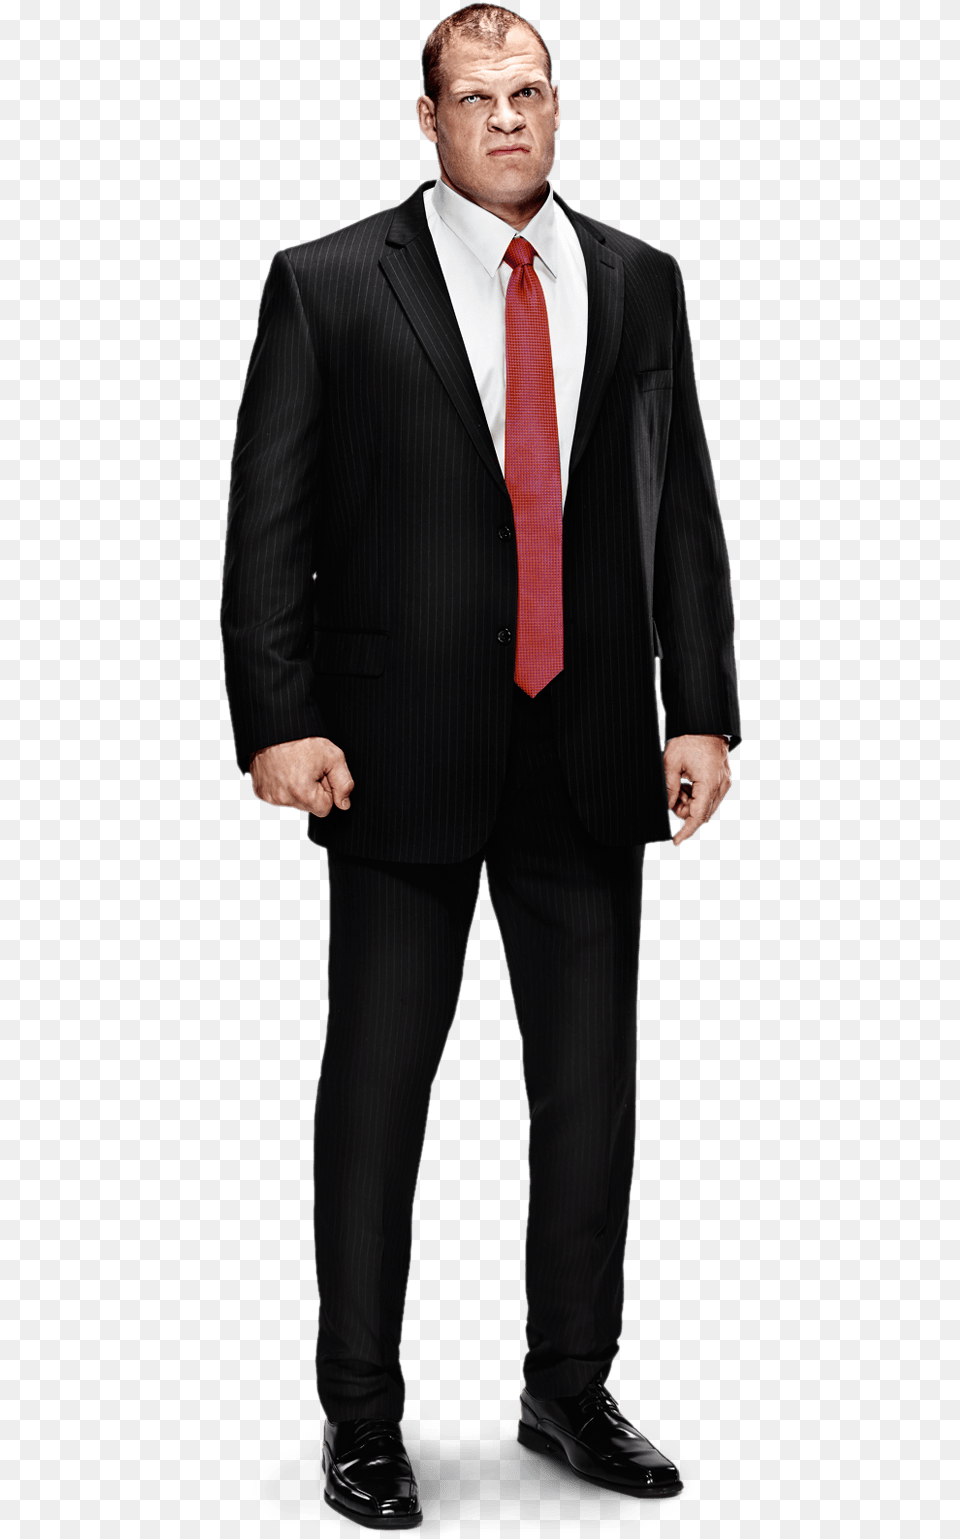 Corporate Kane Suit Corporate Kane Wwe, Accessories, Tie, Tuxedo, Formal Wear Png